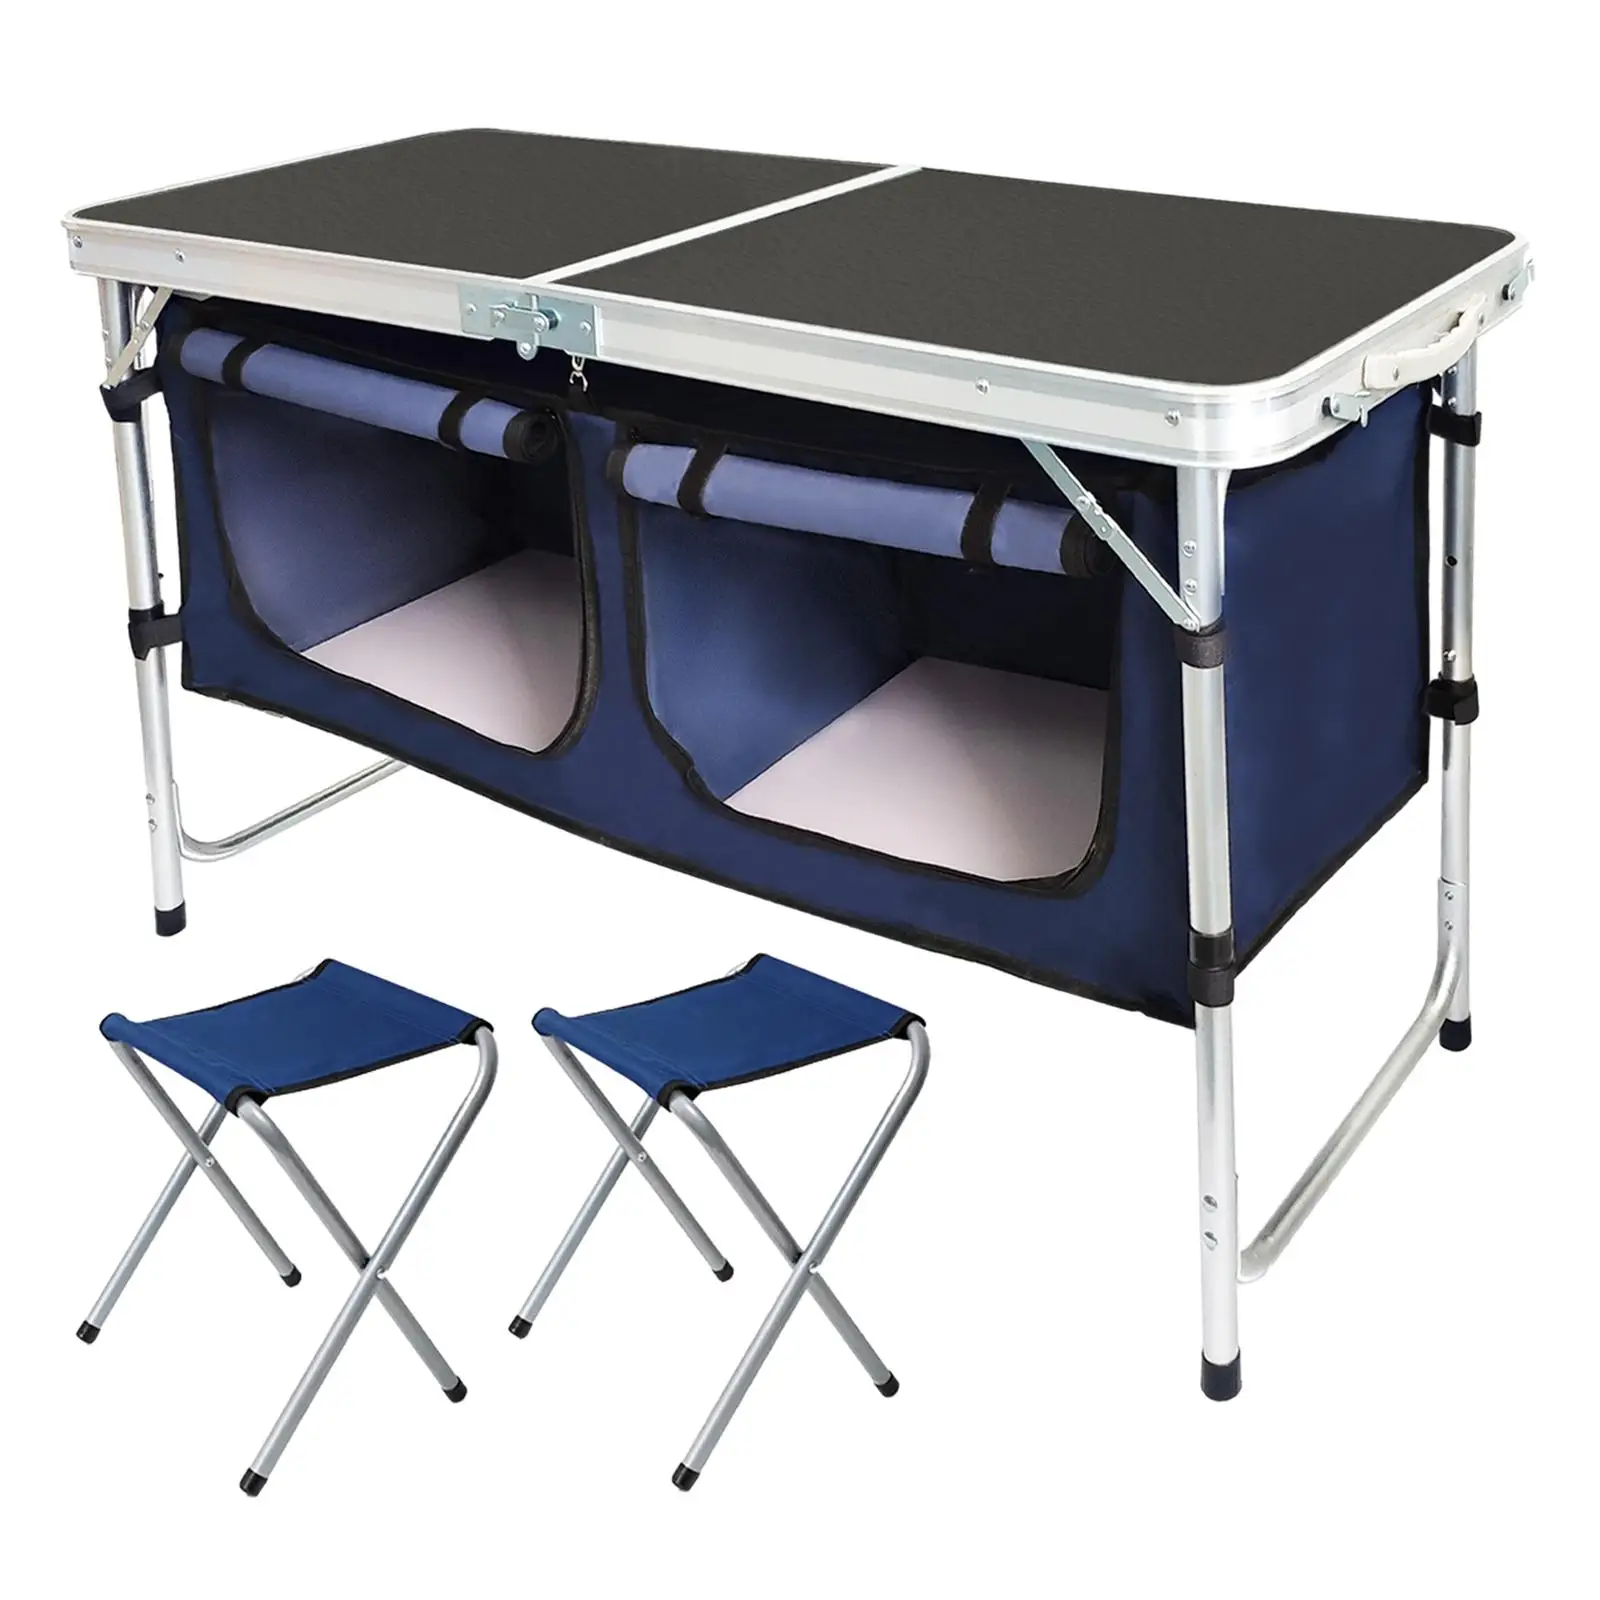 Portable Camping Table Rectangular Aluminum Alloy Garden Patio Furniture for Party, Outdoor Fishing, Beach, Backyards